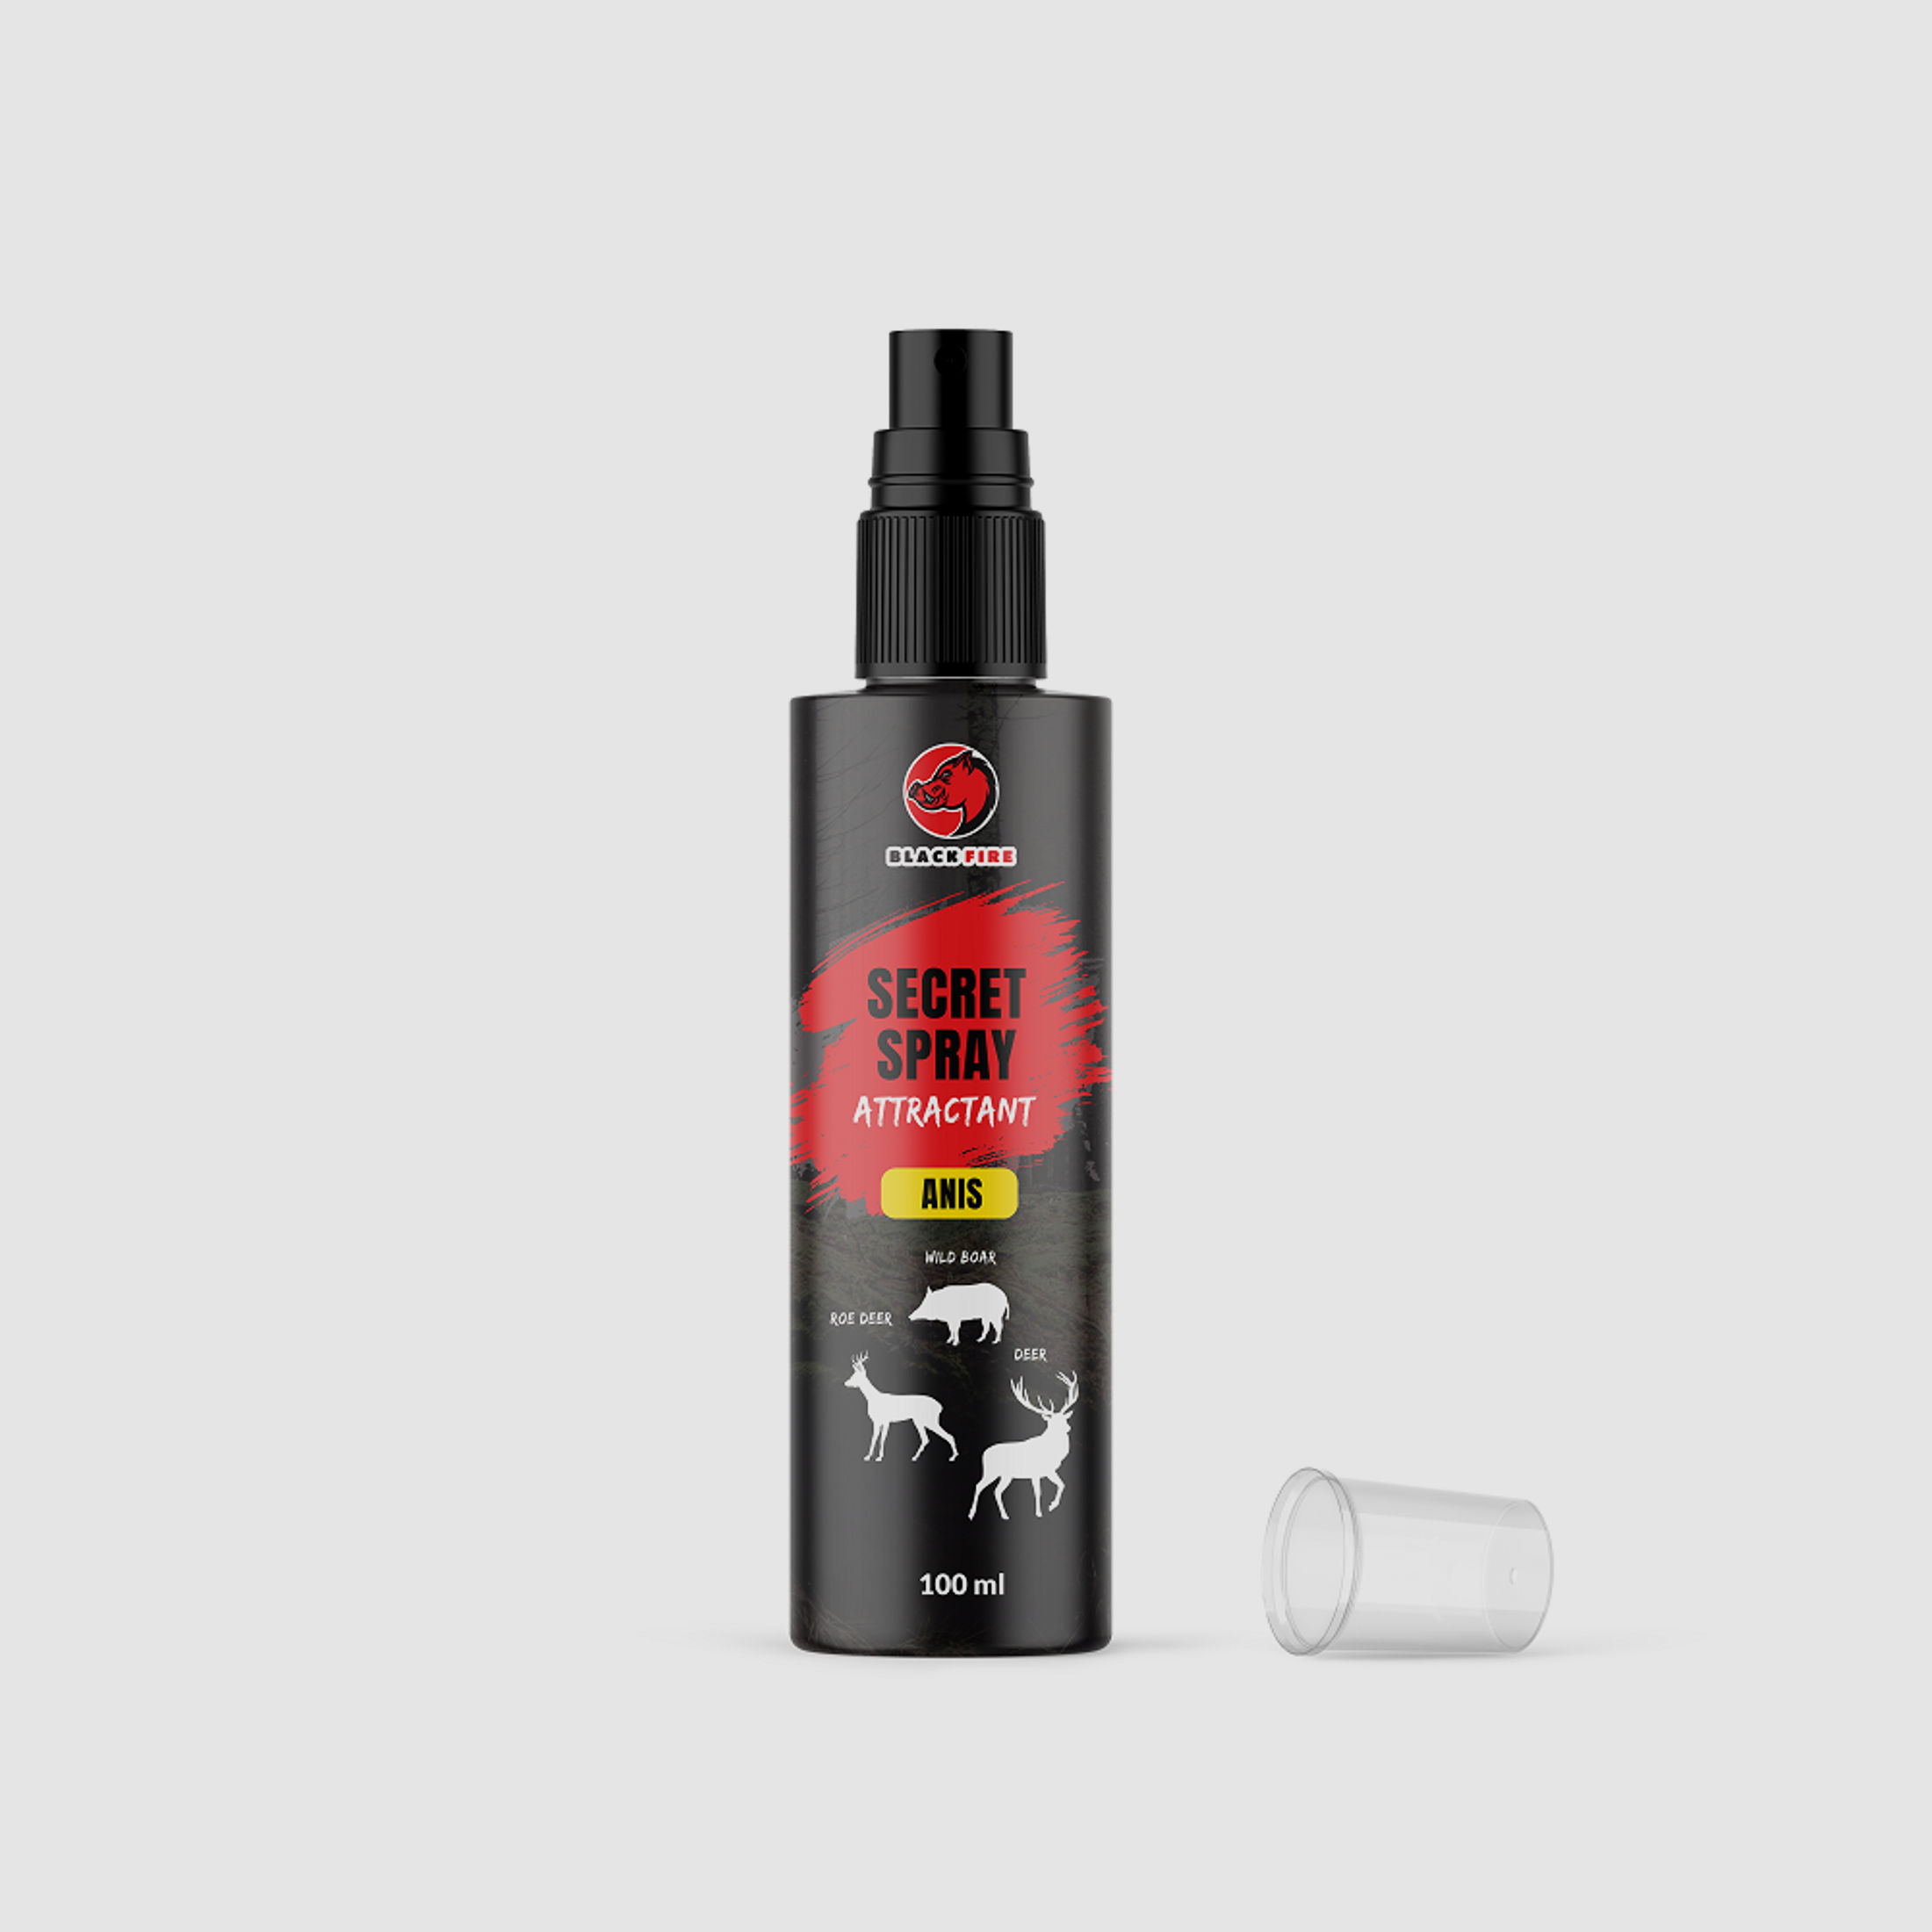 Black Fire Sprüh-Lockstoff Secret Spray